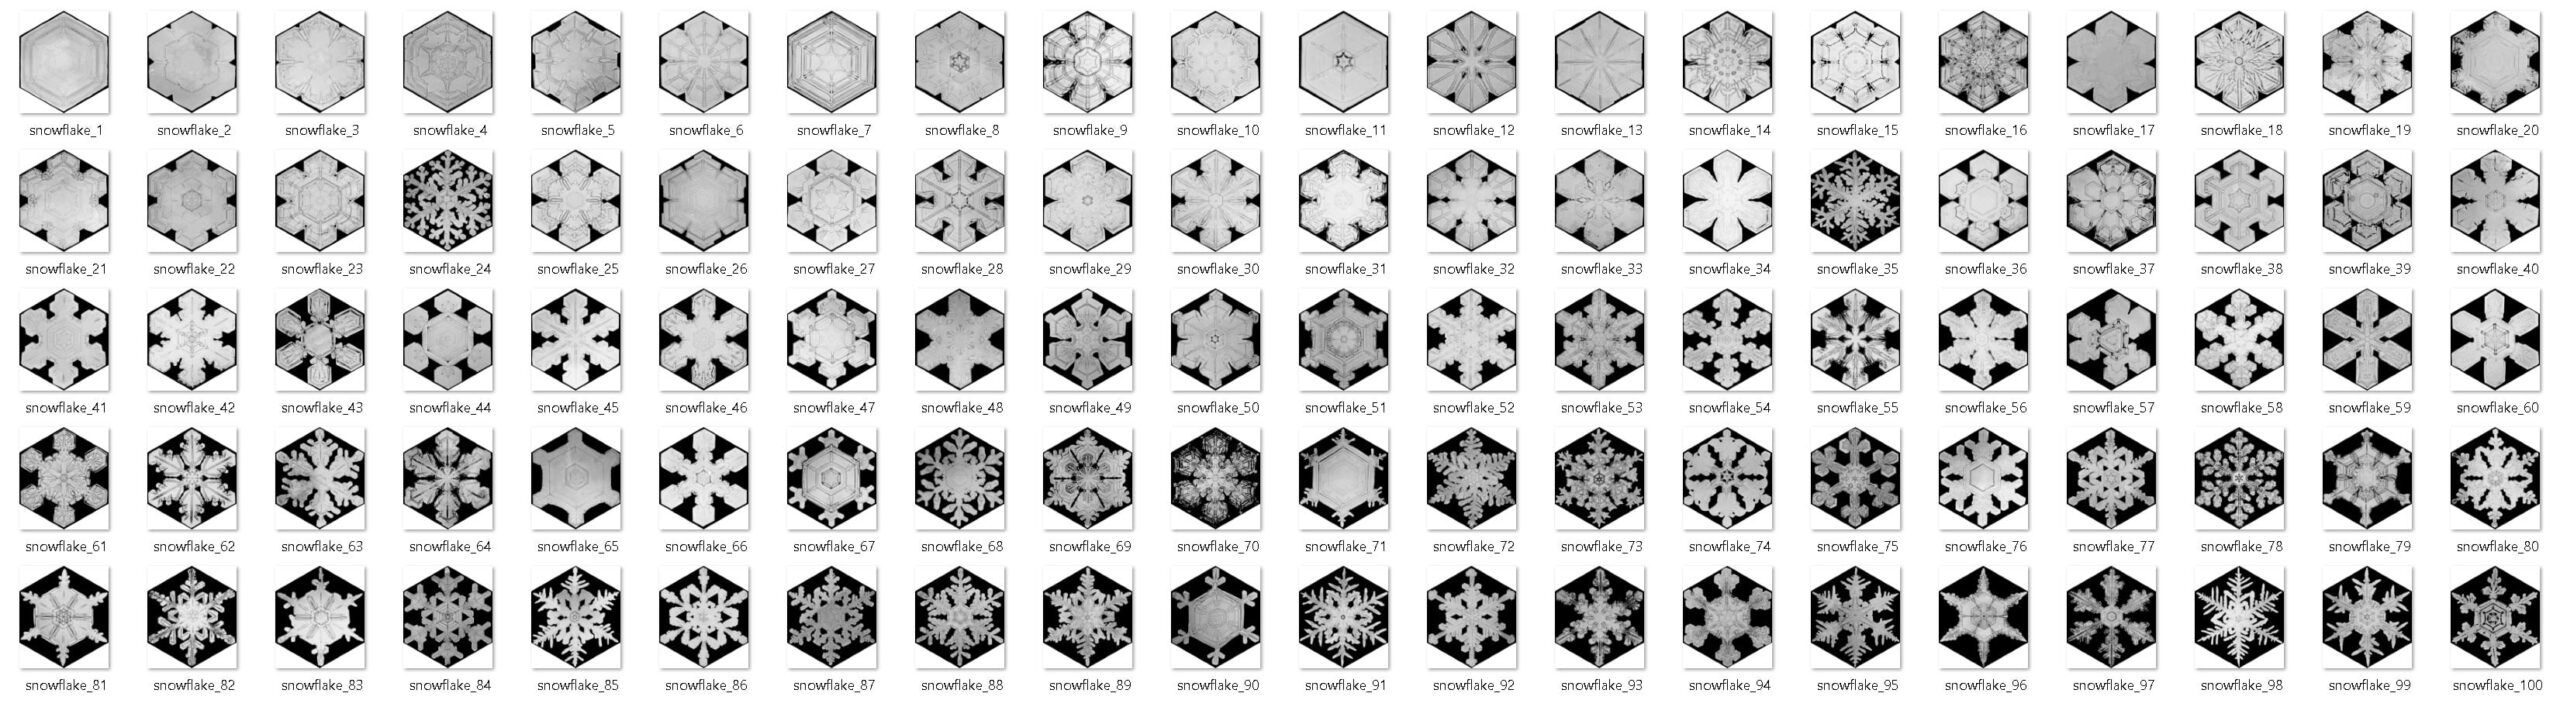 Set of 100 snowflake symbols